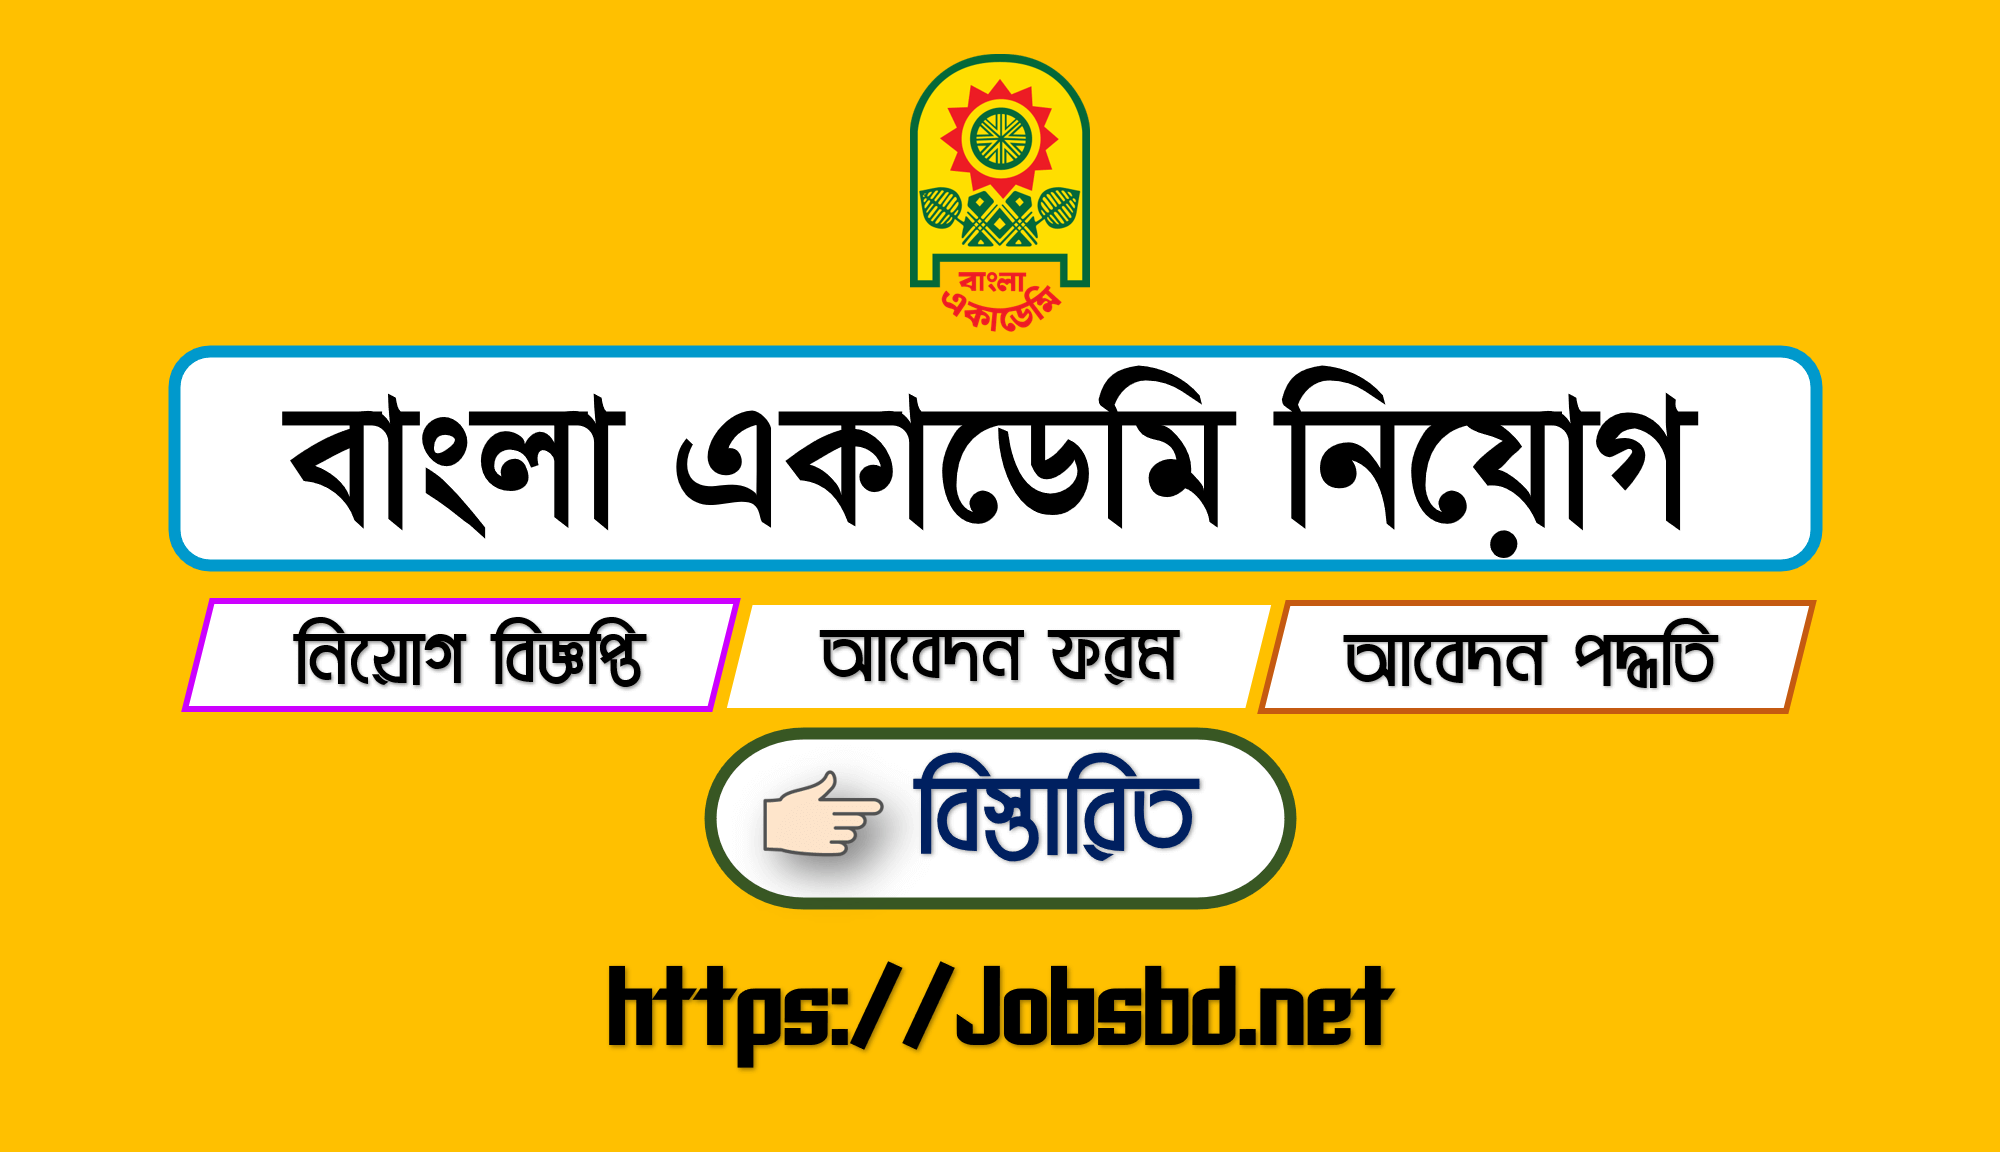 Bangla Academy Job Circular